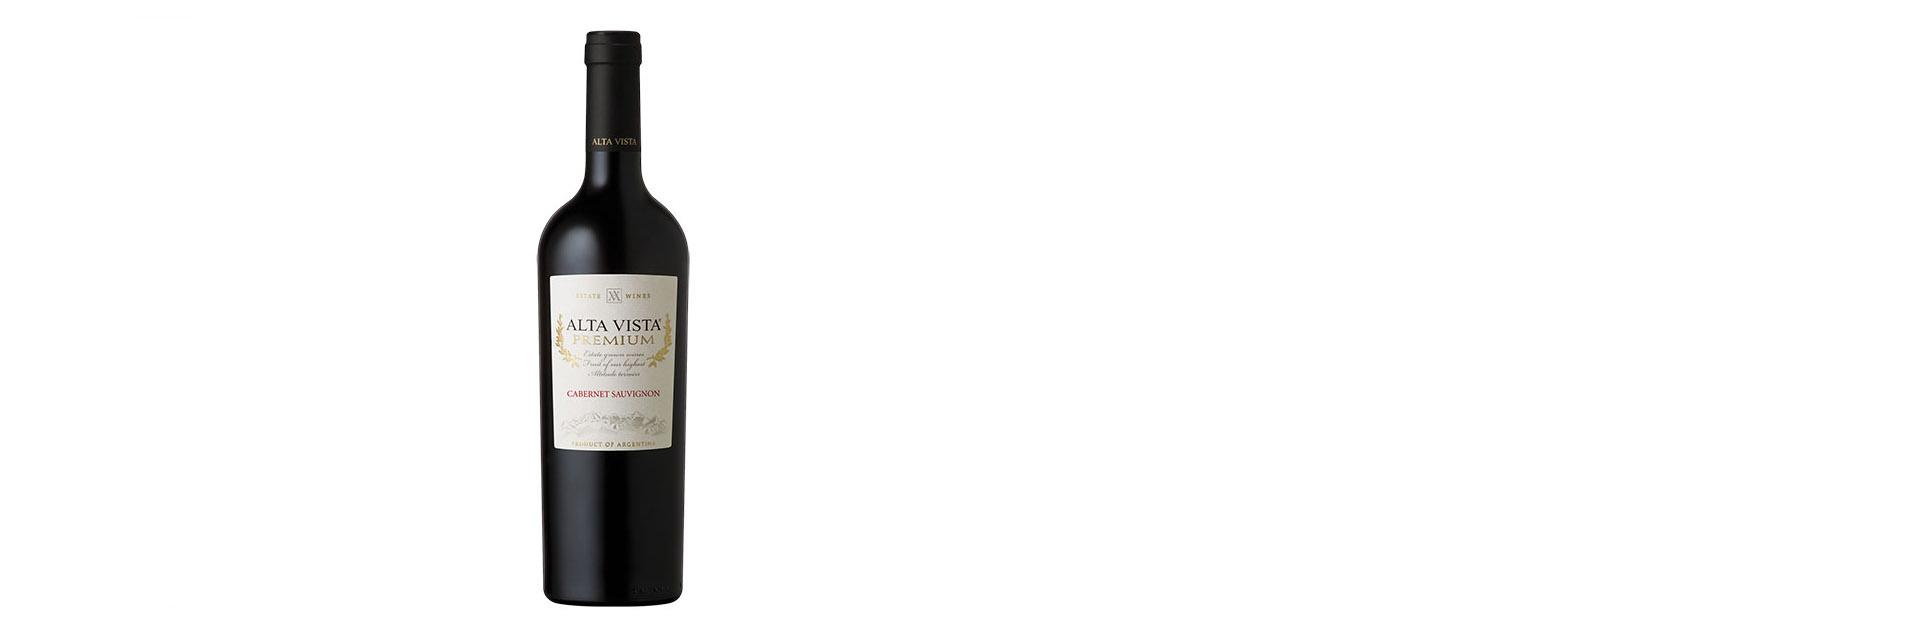 Rượu vang Alta Vista Premium Cabernet Sauvignon